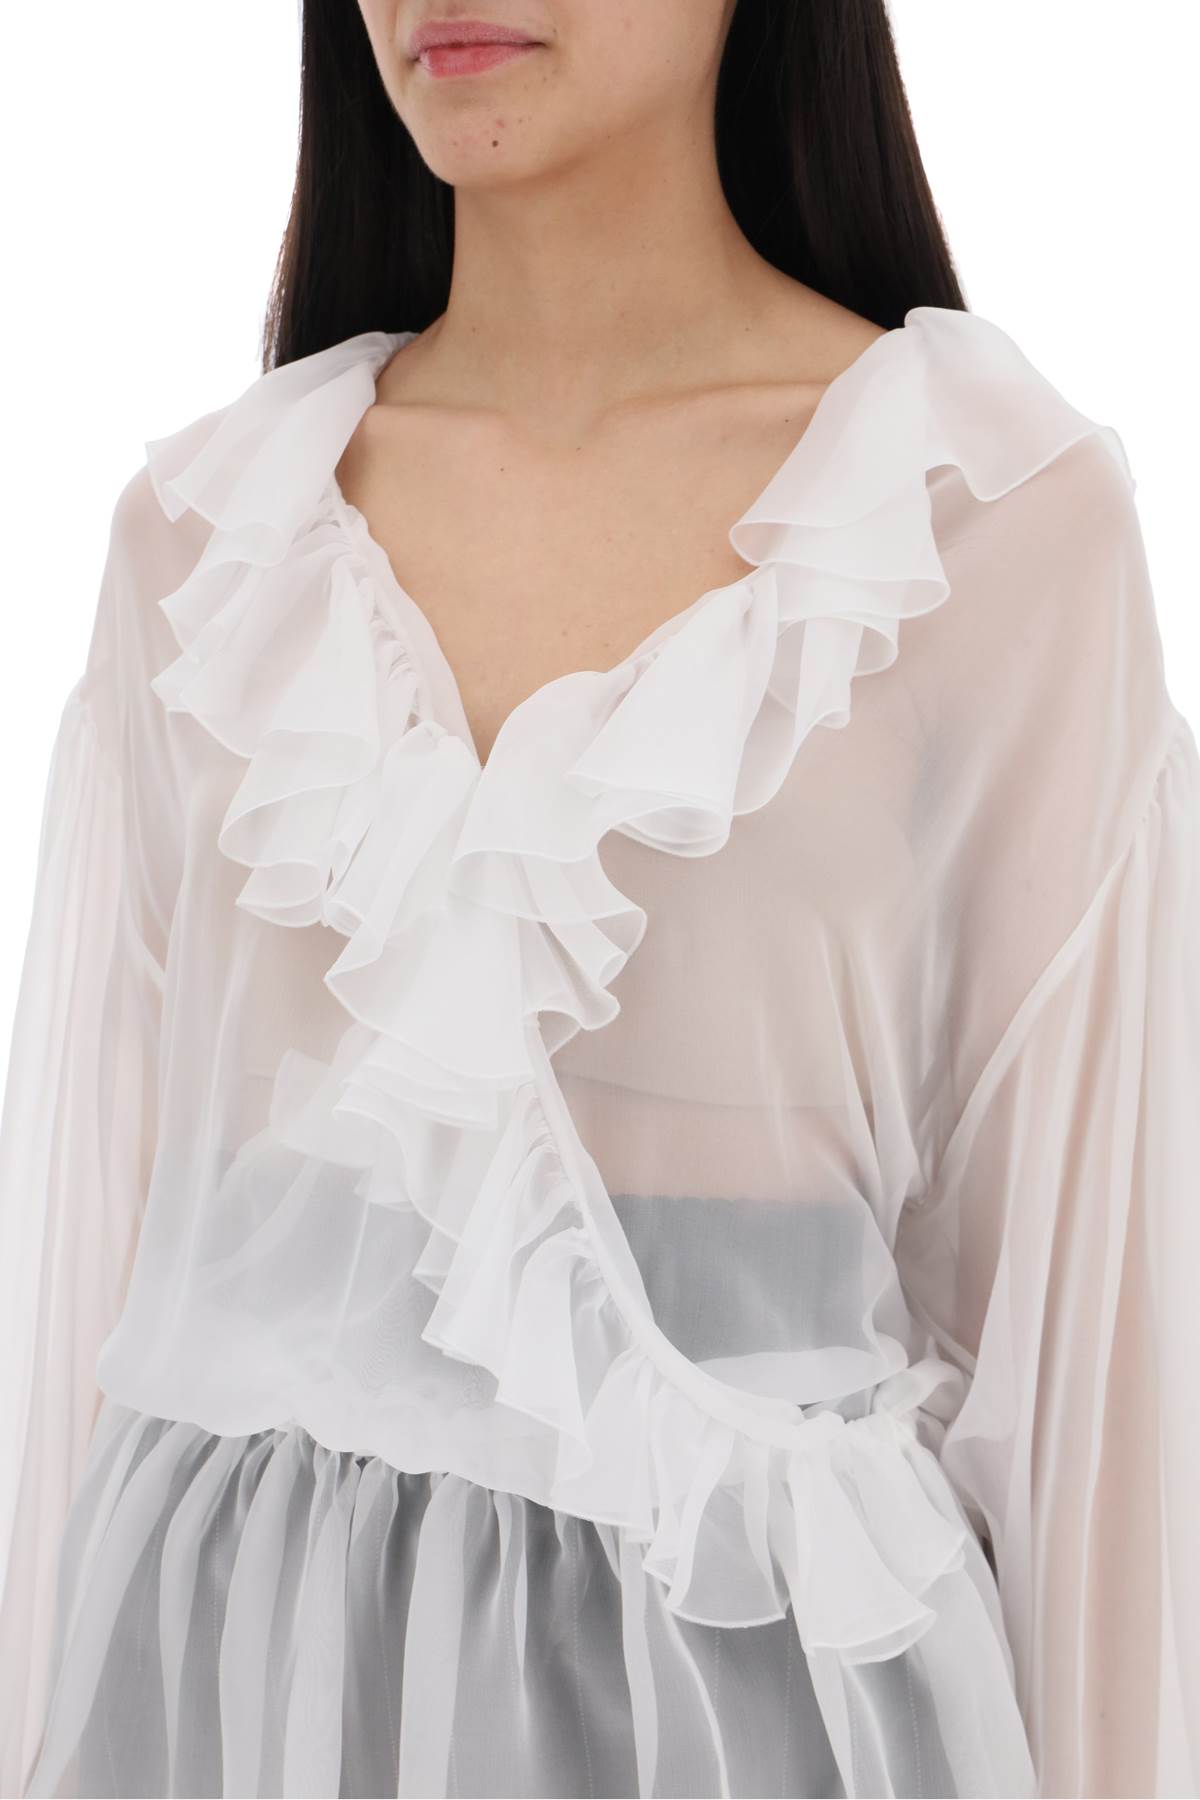 Dolce & gabbana silk chiffon blouse with ruffles.-3